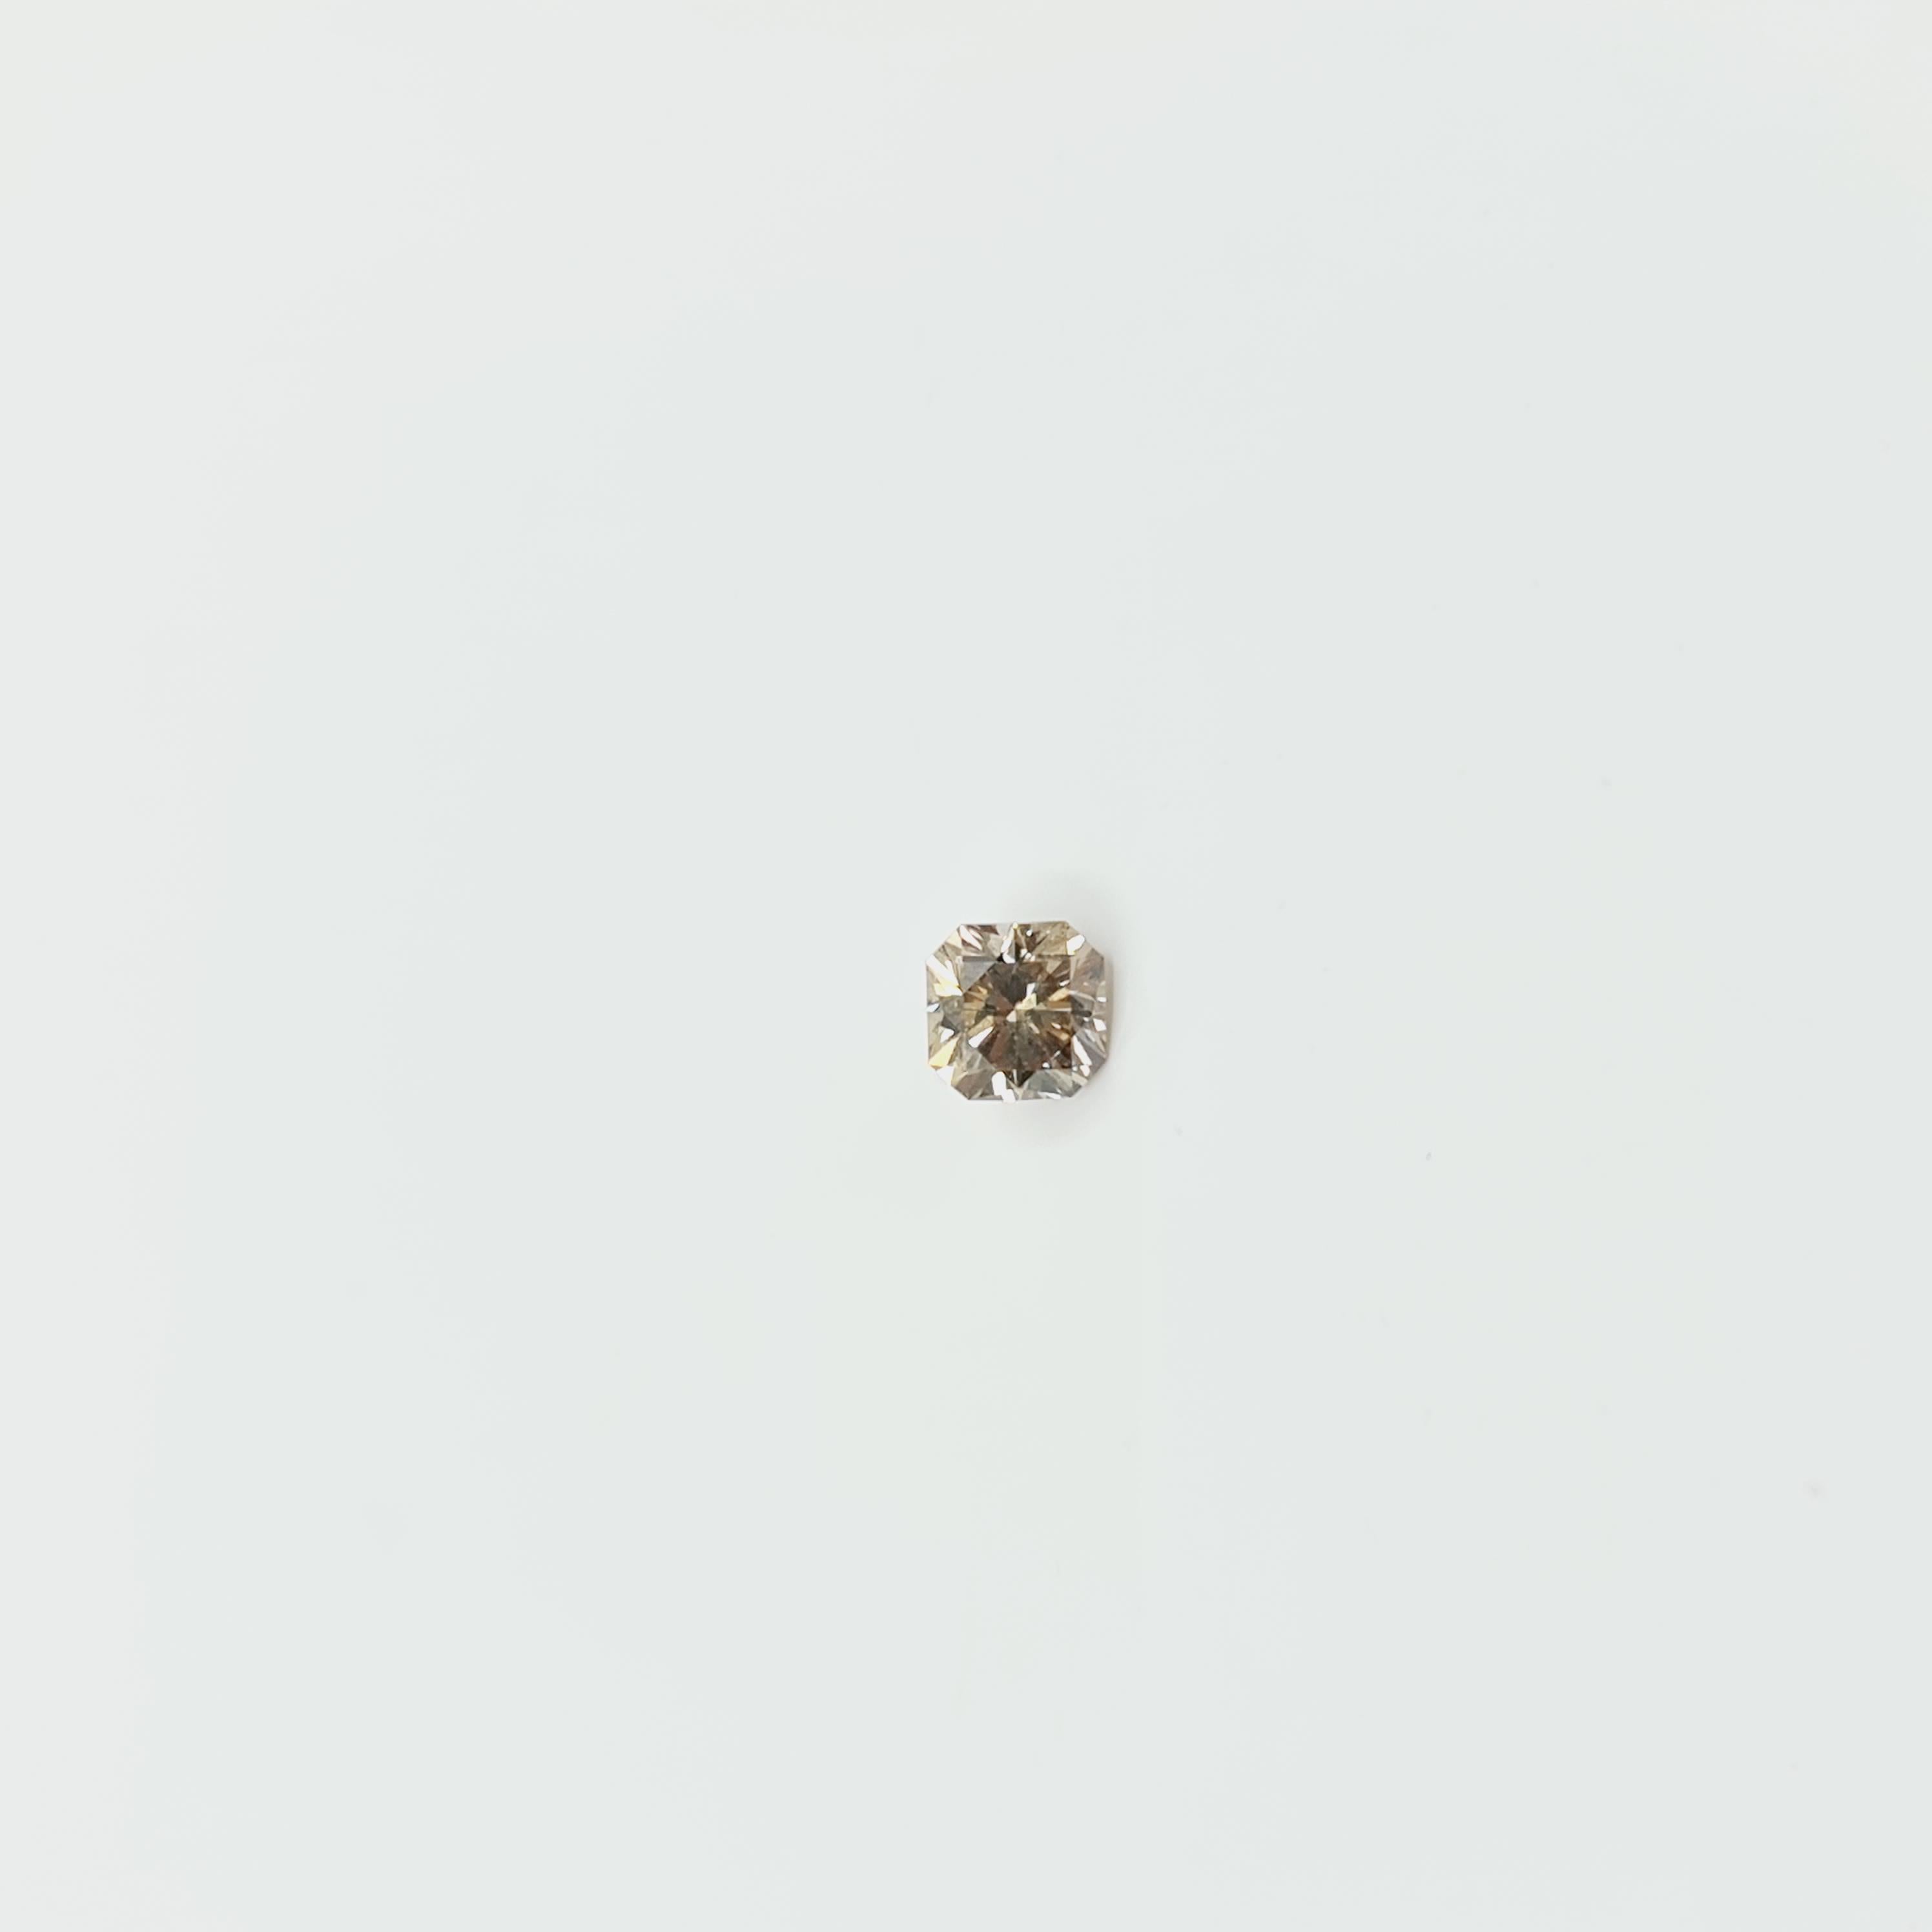 GIA Certified Fancy Brown(No Overtone) Diamond 0.47 Carat VS2 